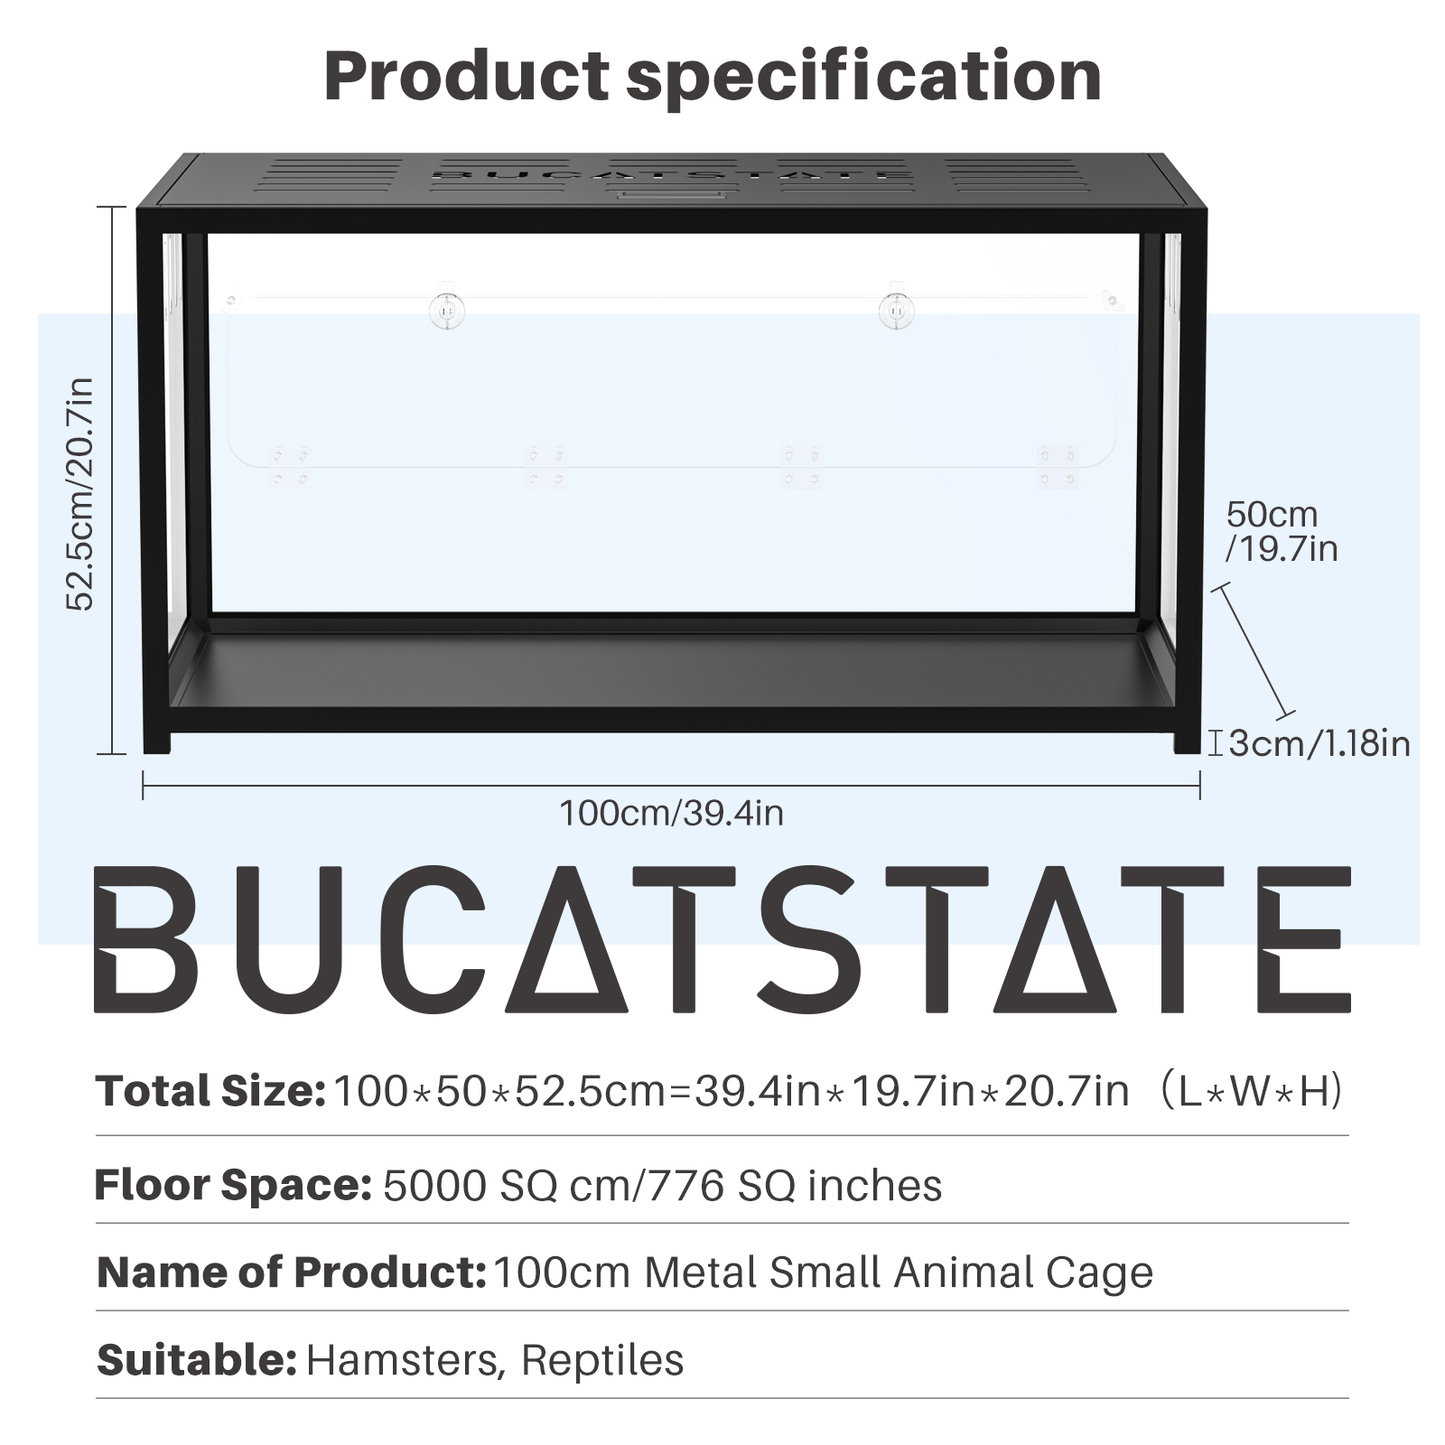 BUCATSTATE Metal Small Animal Cage 2.0